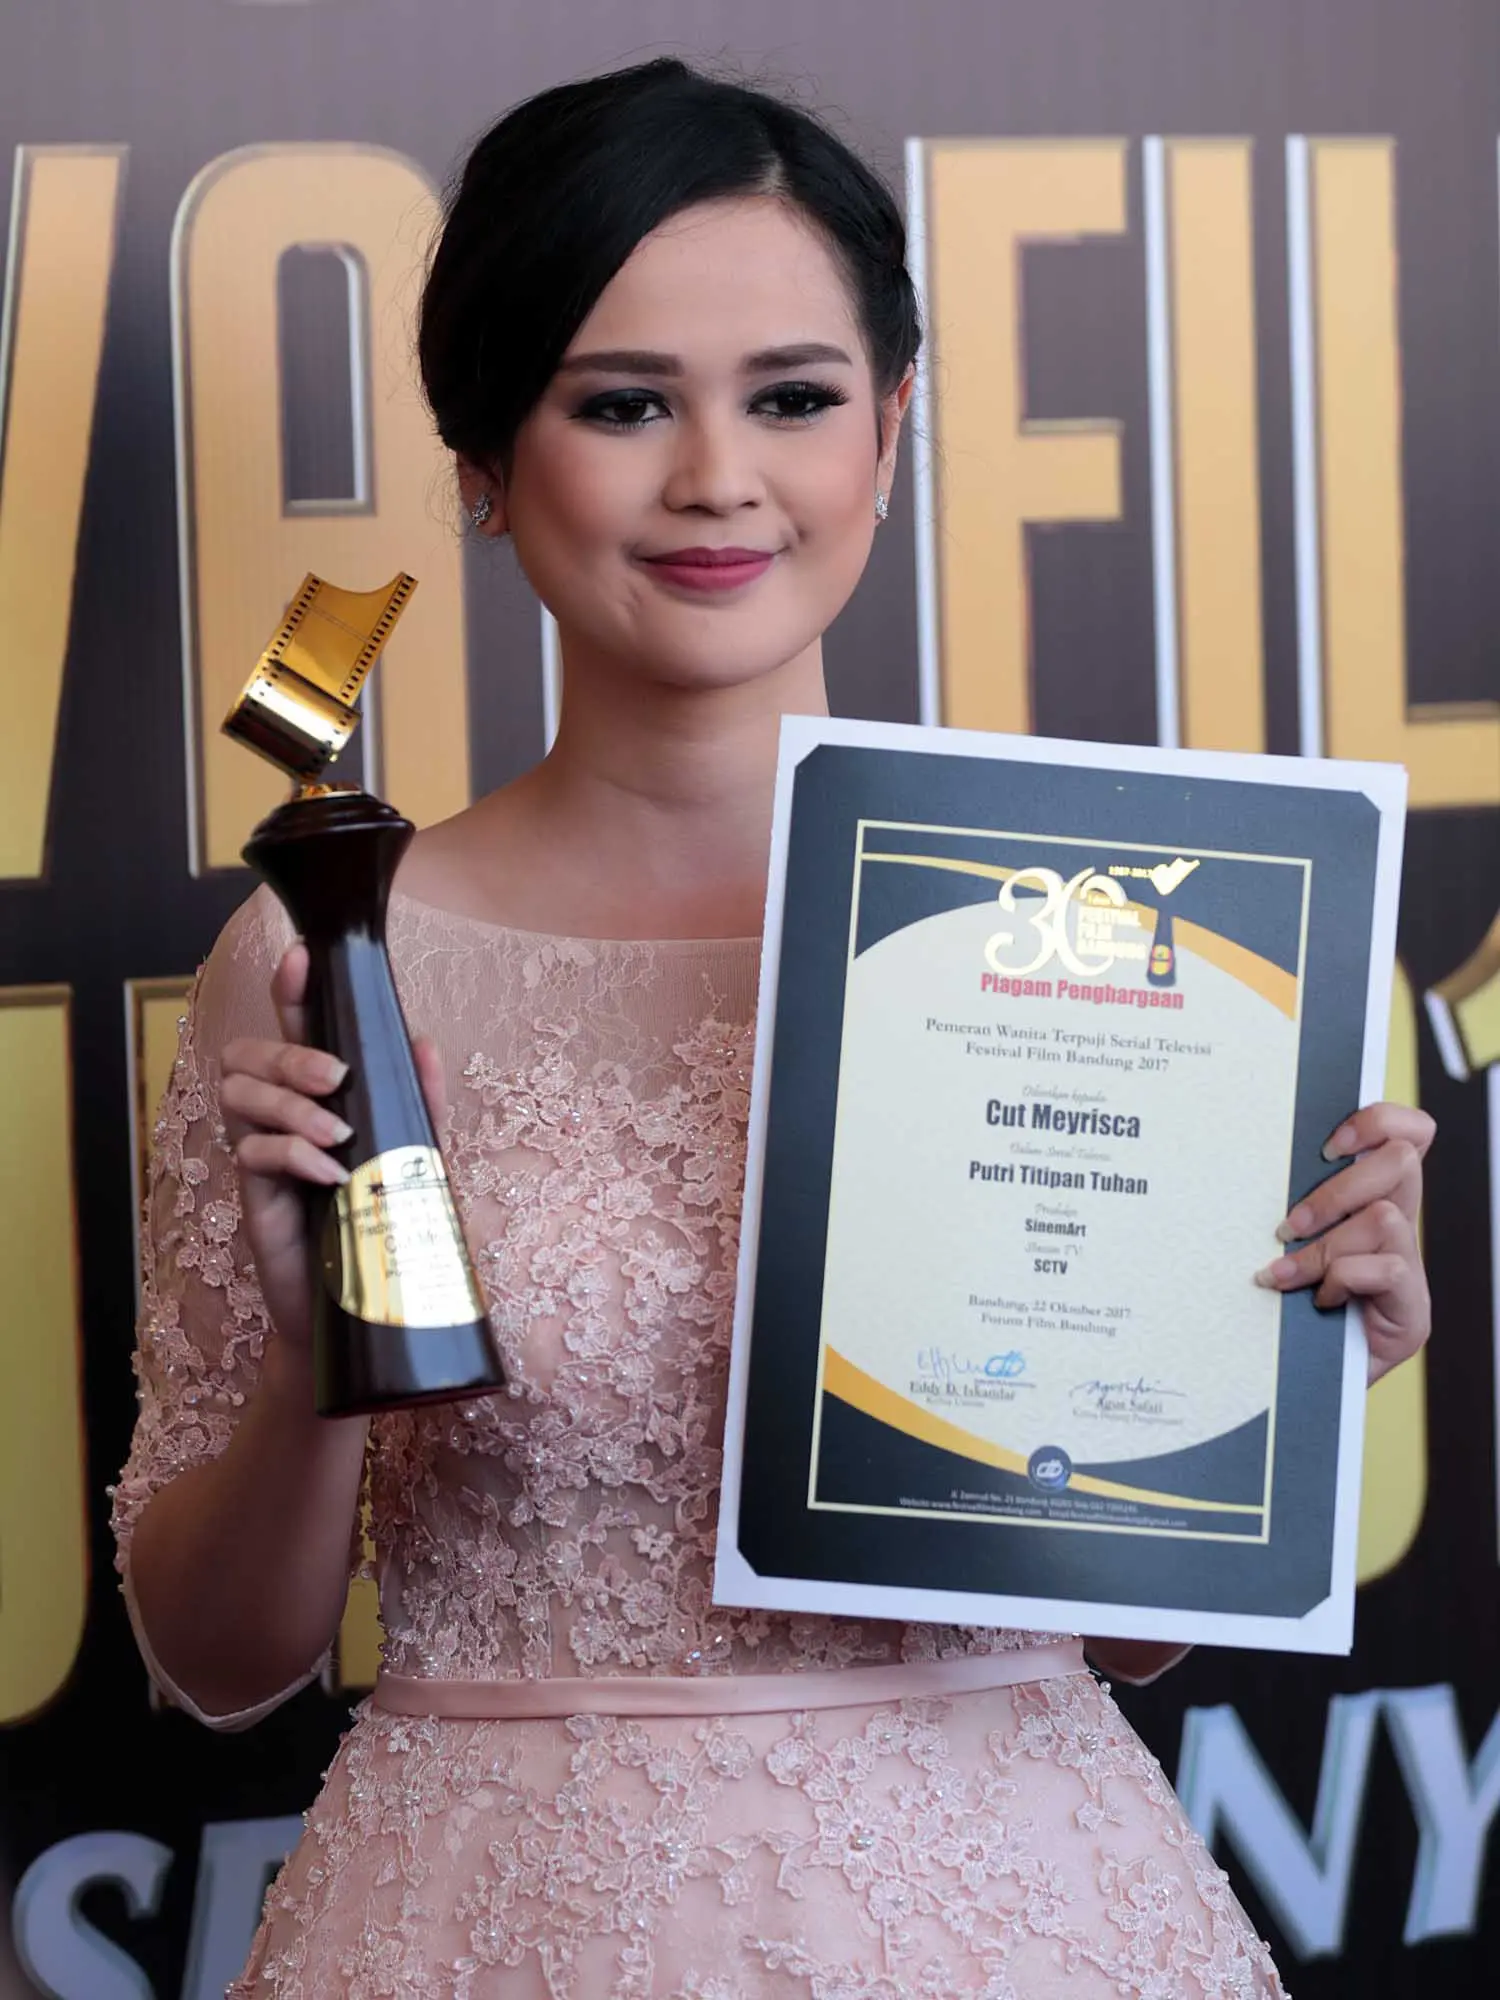 Cut Meyriska saat menerima penghargaan dalam ajang Festival Film Bandung 2017 (Deki Prayoga/bintang.com)